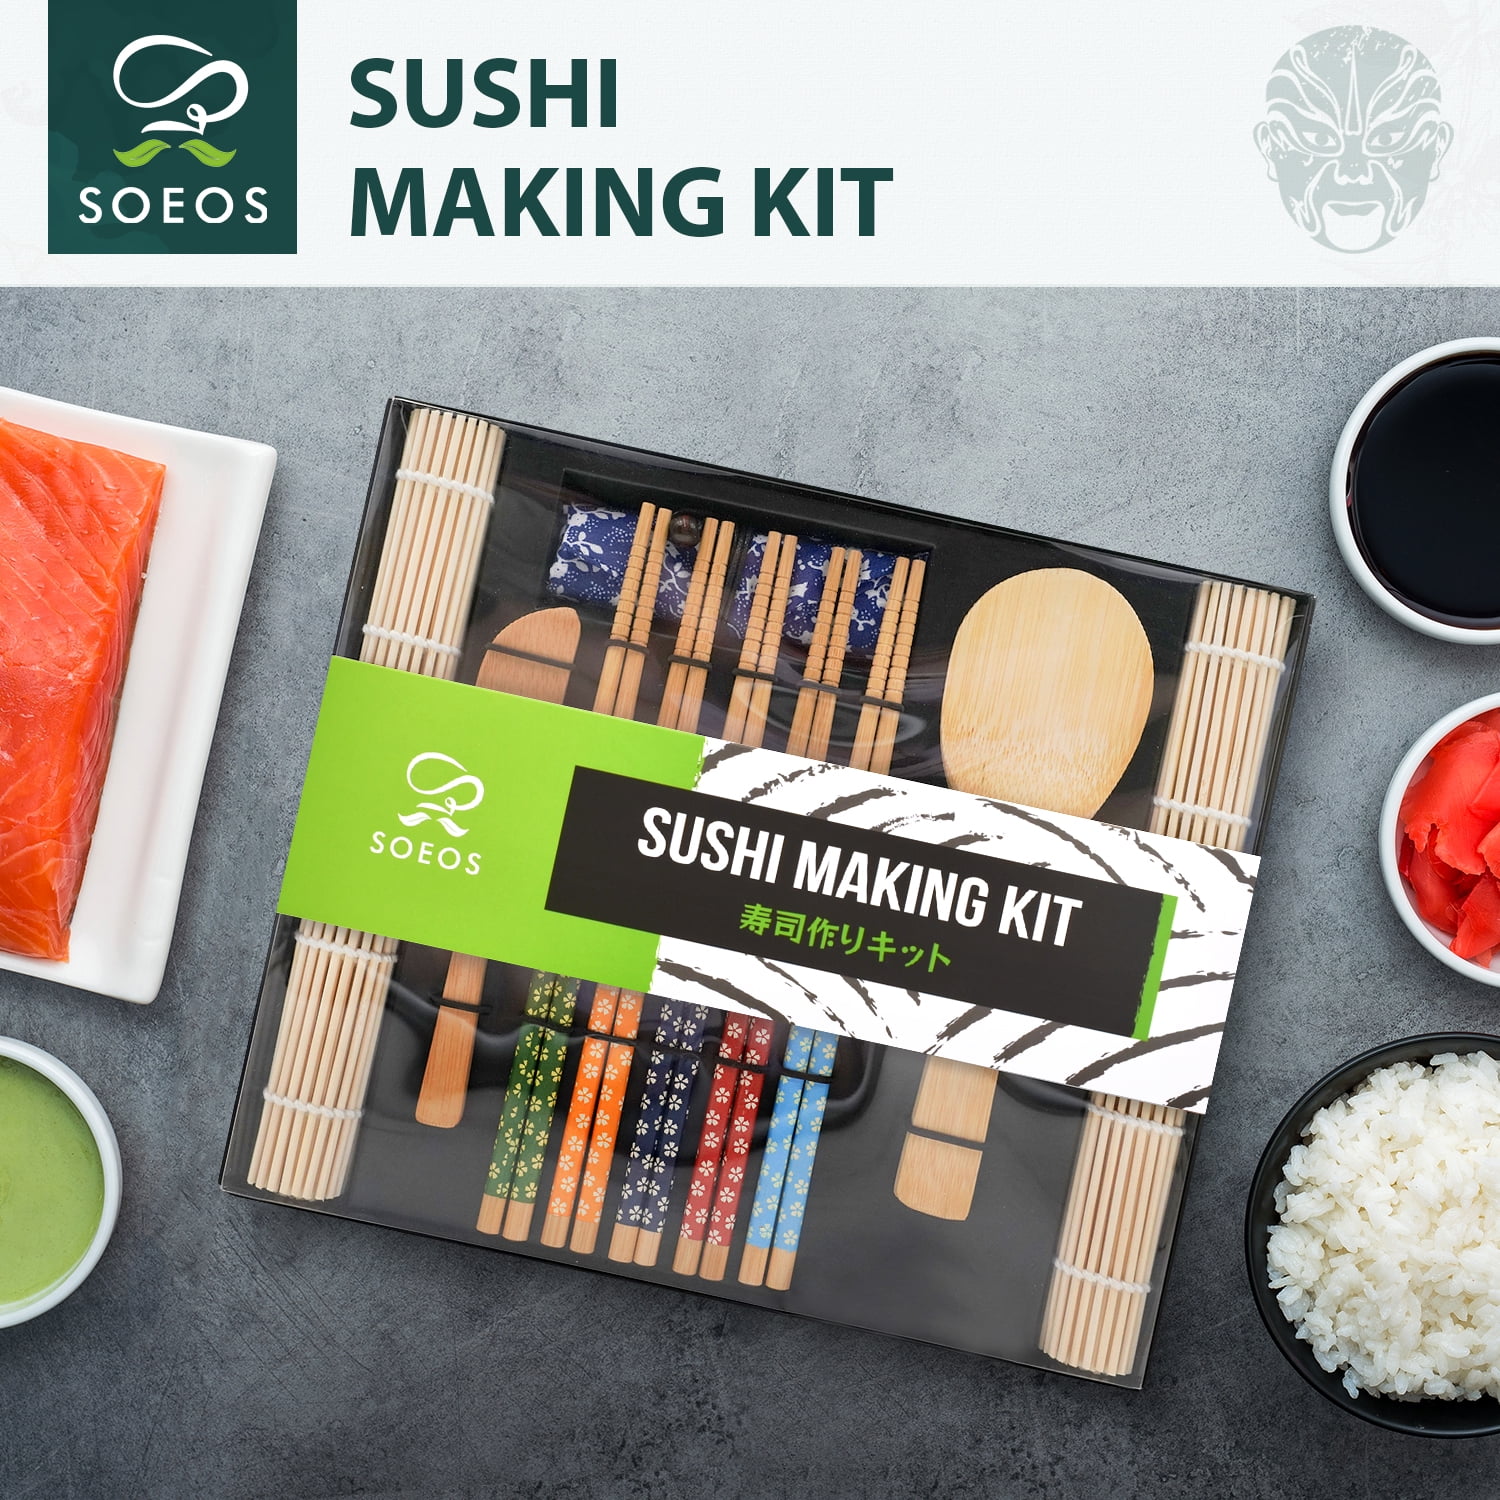 SIMPLY SUSHI KIT - 65 minute DVD Meal Kit - Mat - Fish Tweezers